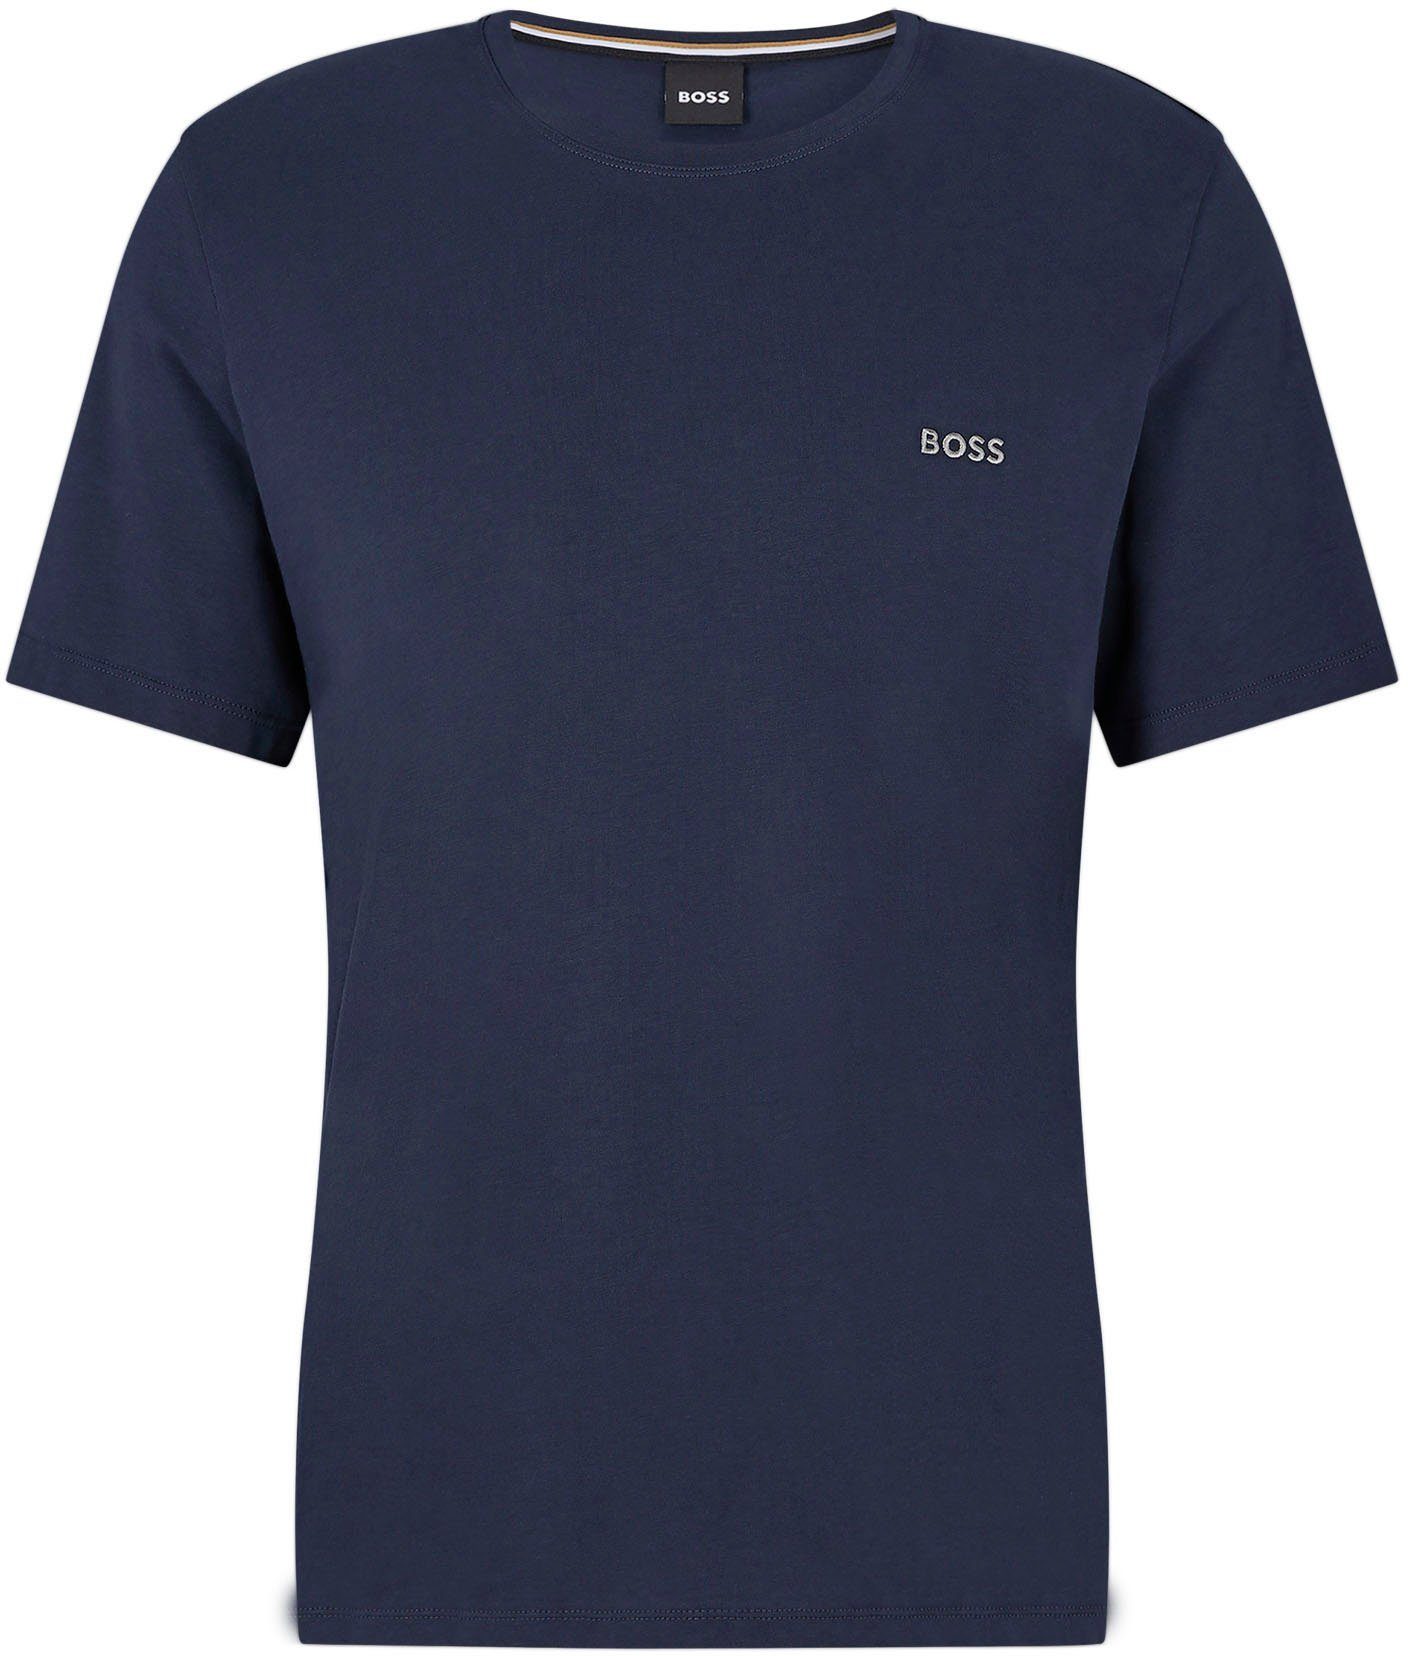 BOSS mit Brustlogo navy T-Shirt